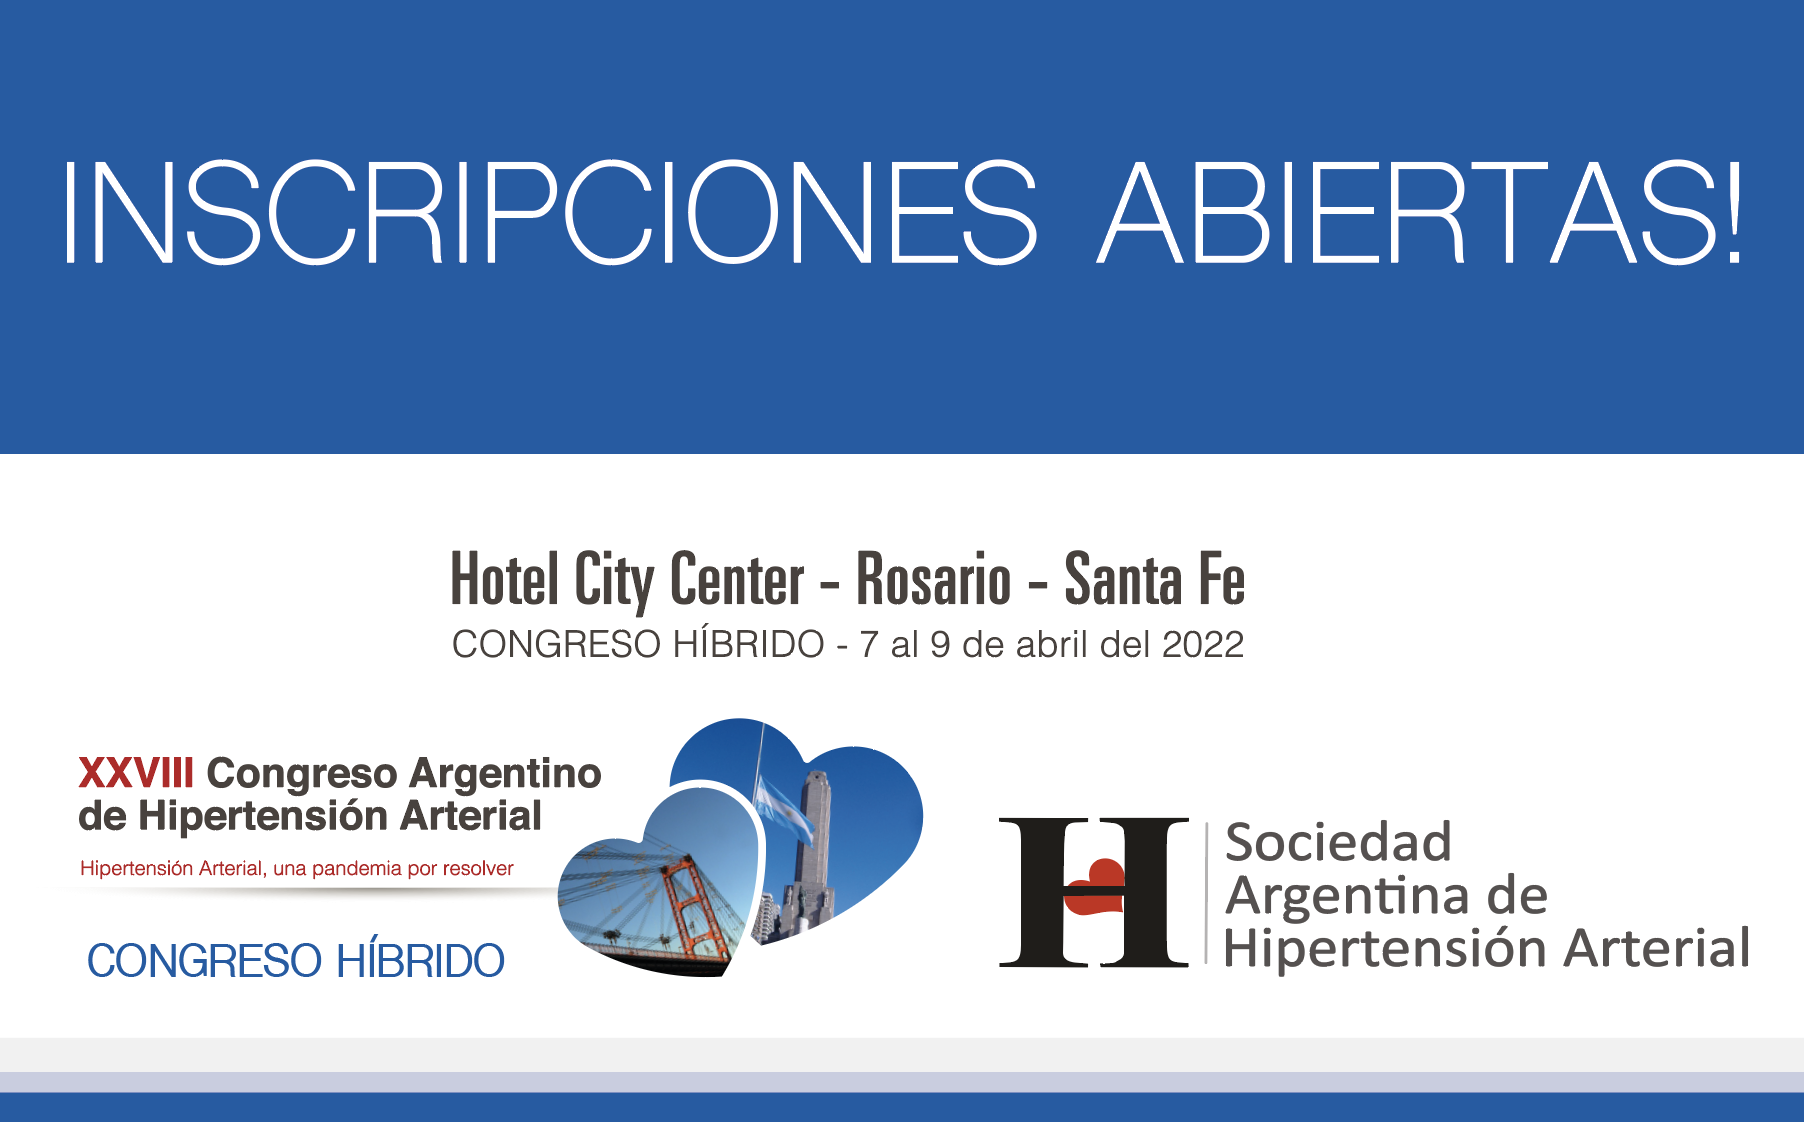 XXVIII Congreso Argentino de Hipertensión Arterial